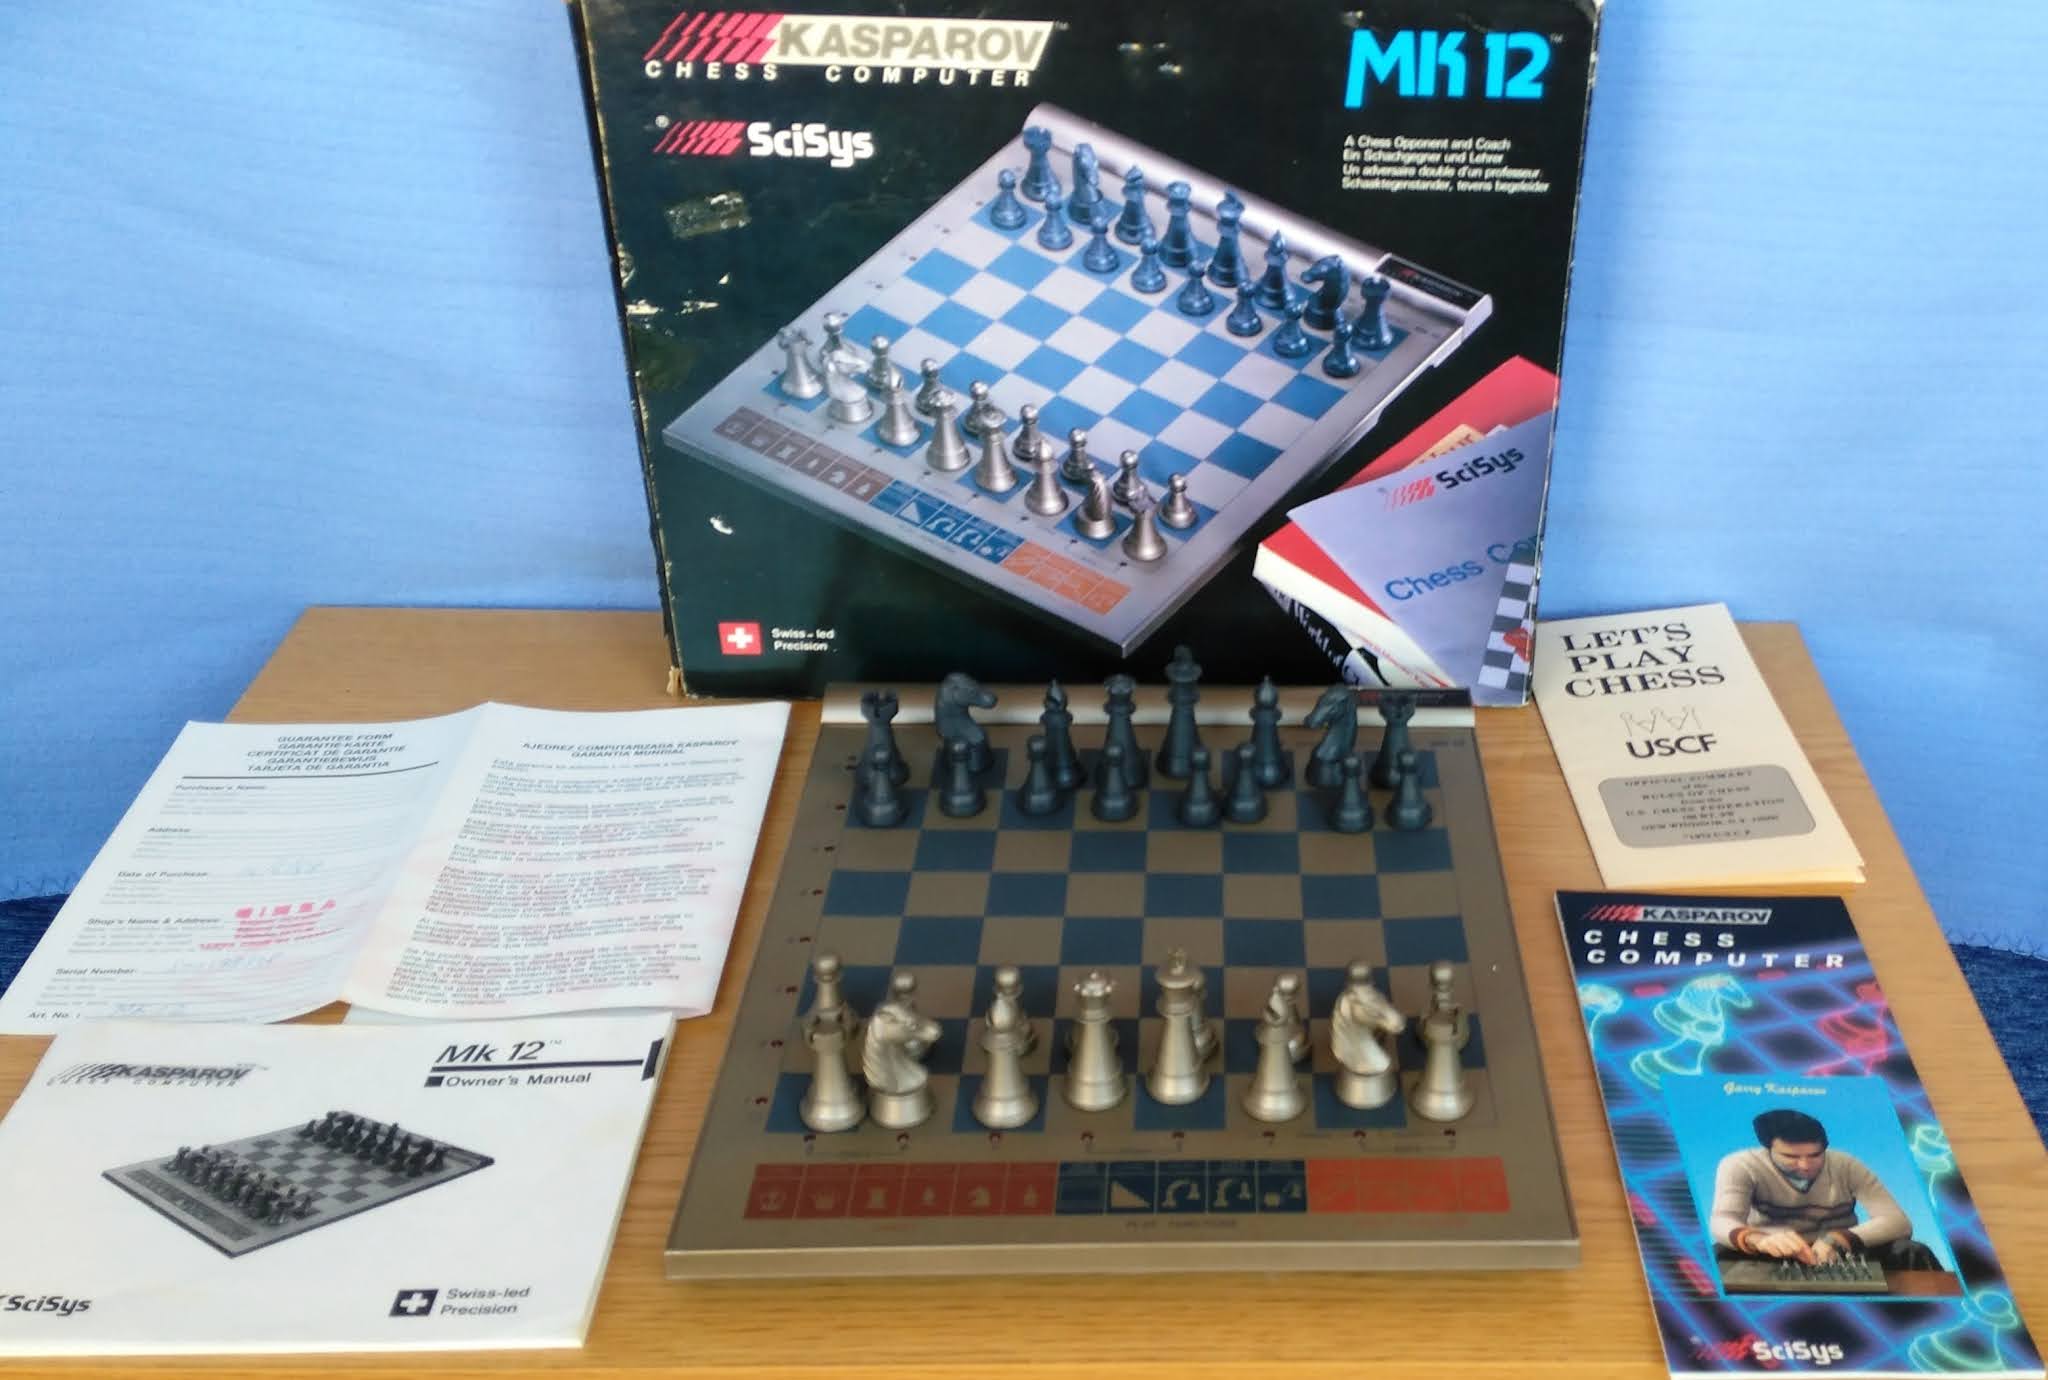  SciSys Kasparov Chess Computer MK12 : Toys & Games